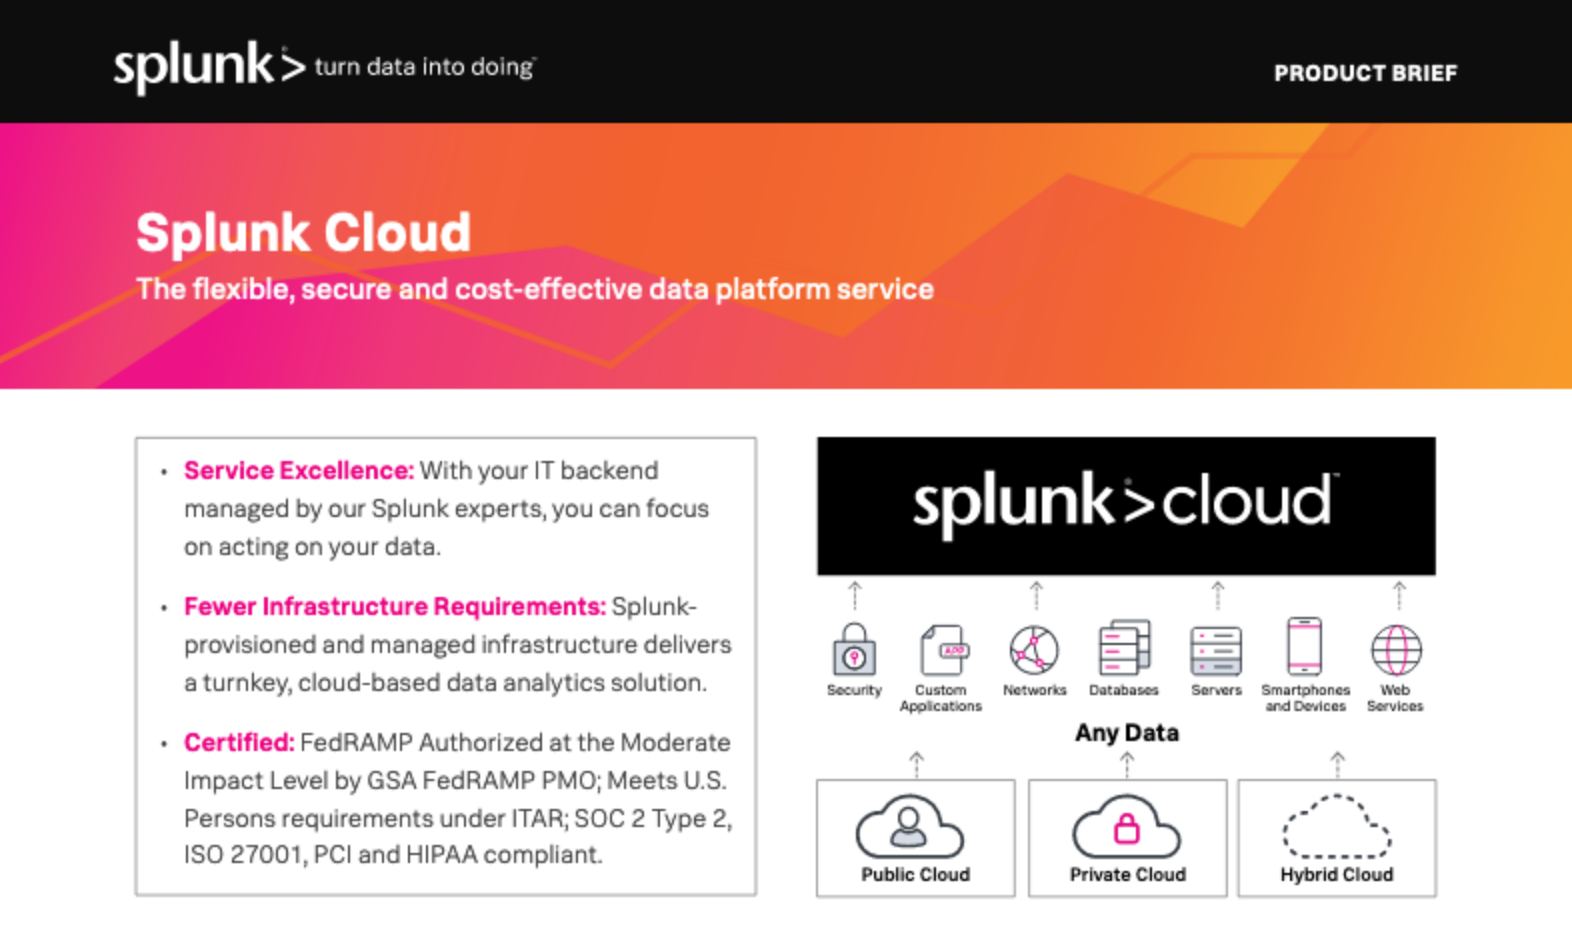 Screenshot 2020 10 16 at 20.57.27 - Splunk Cloud Product Brief